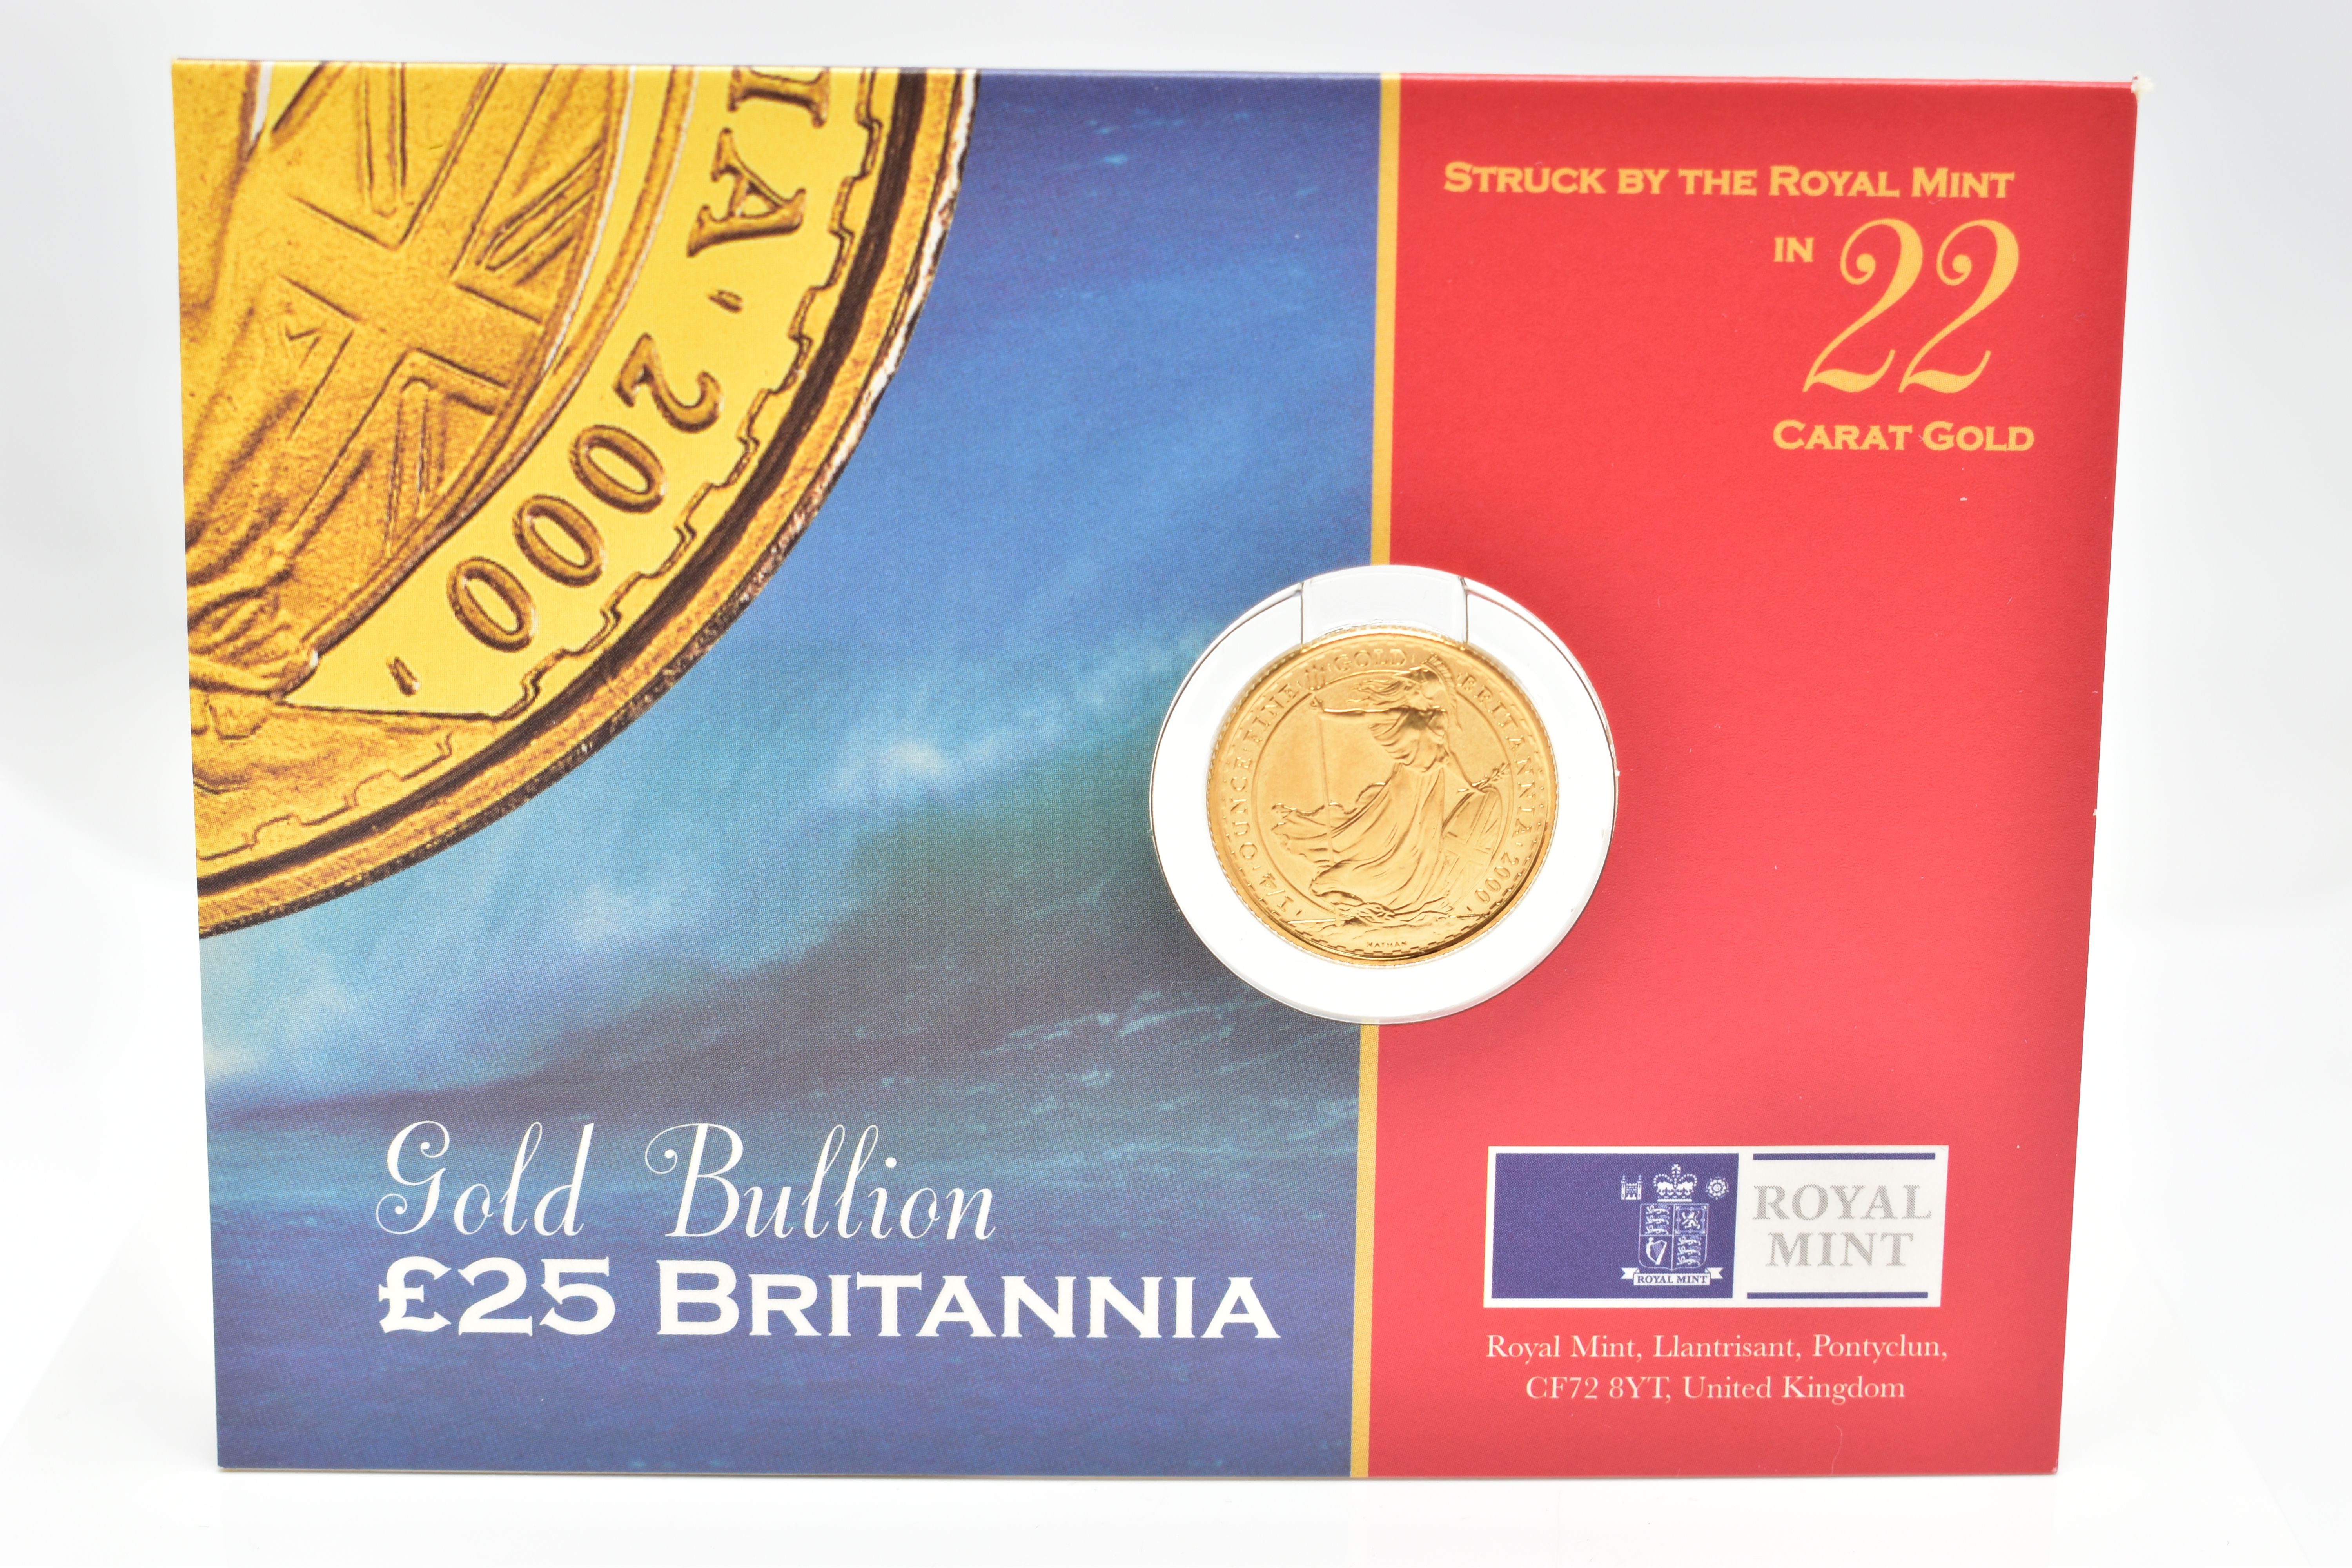 A ROYAL MINT 2000 CARDED GOLD BULLION £25 BRITANNIA COIN, 22.00mm, 8.513 grams, issue limit 50,000